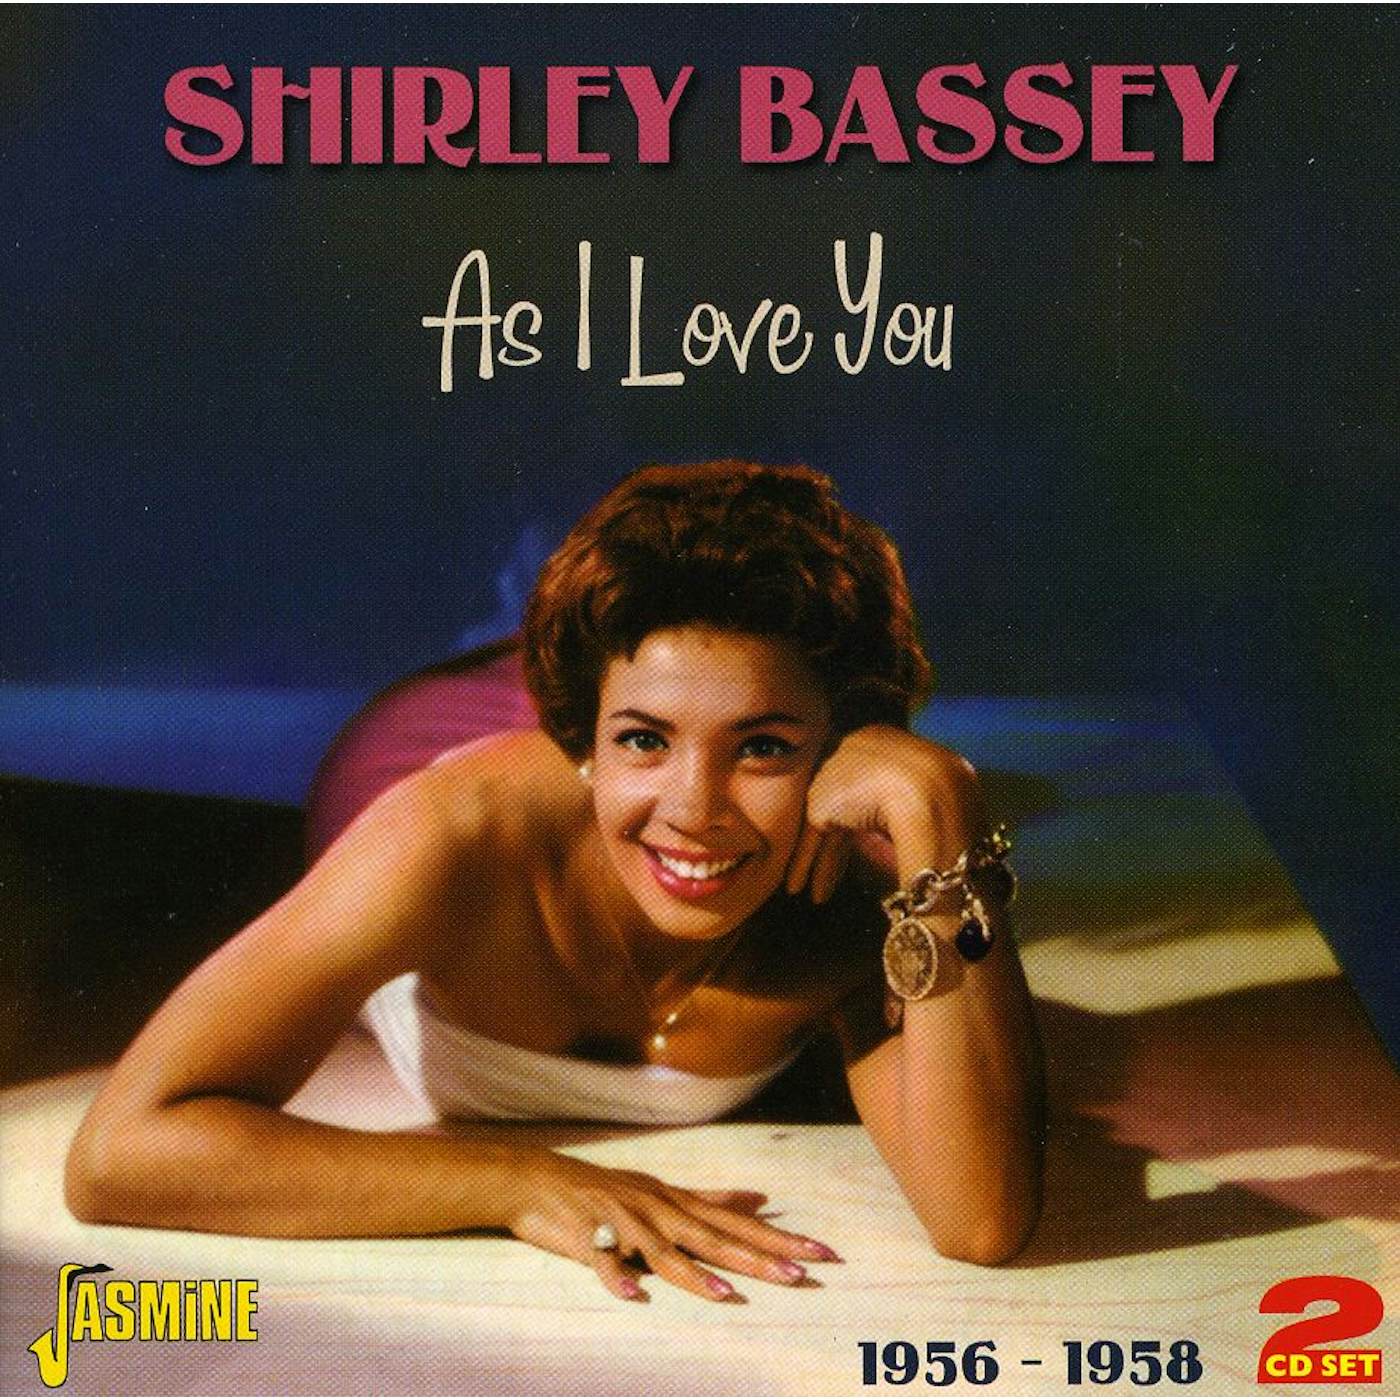 Shirley Bassey AS I LOVE YOU 1956-58 CD